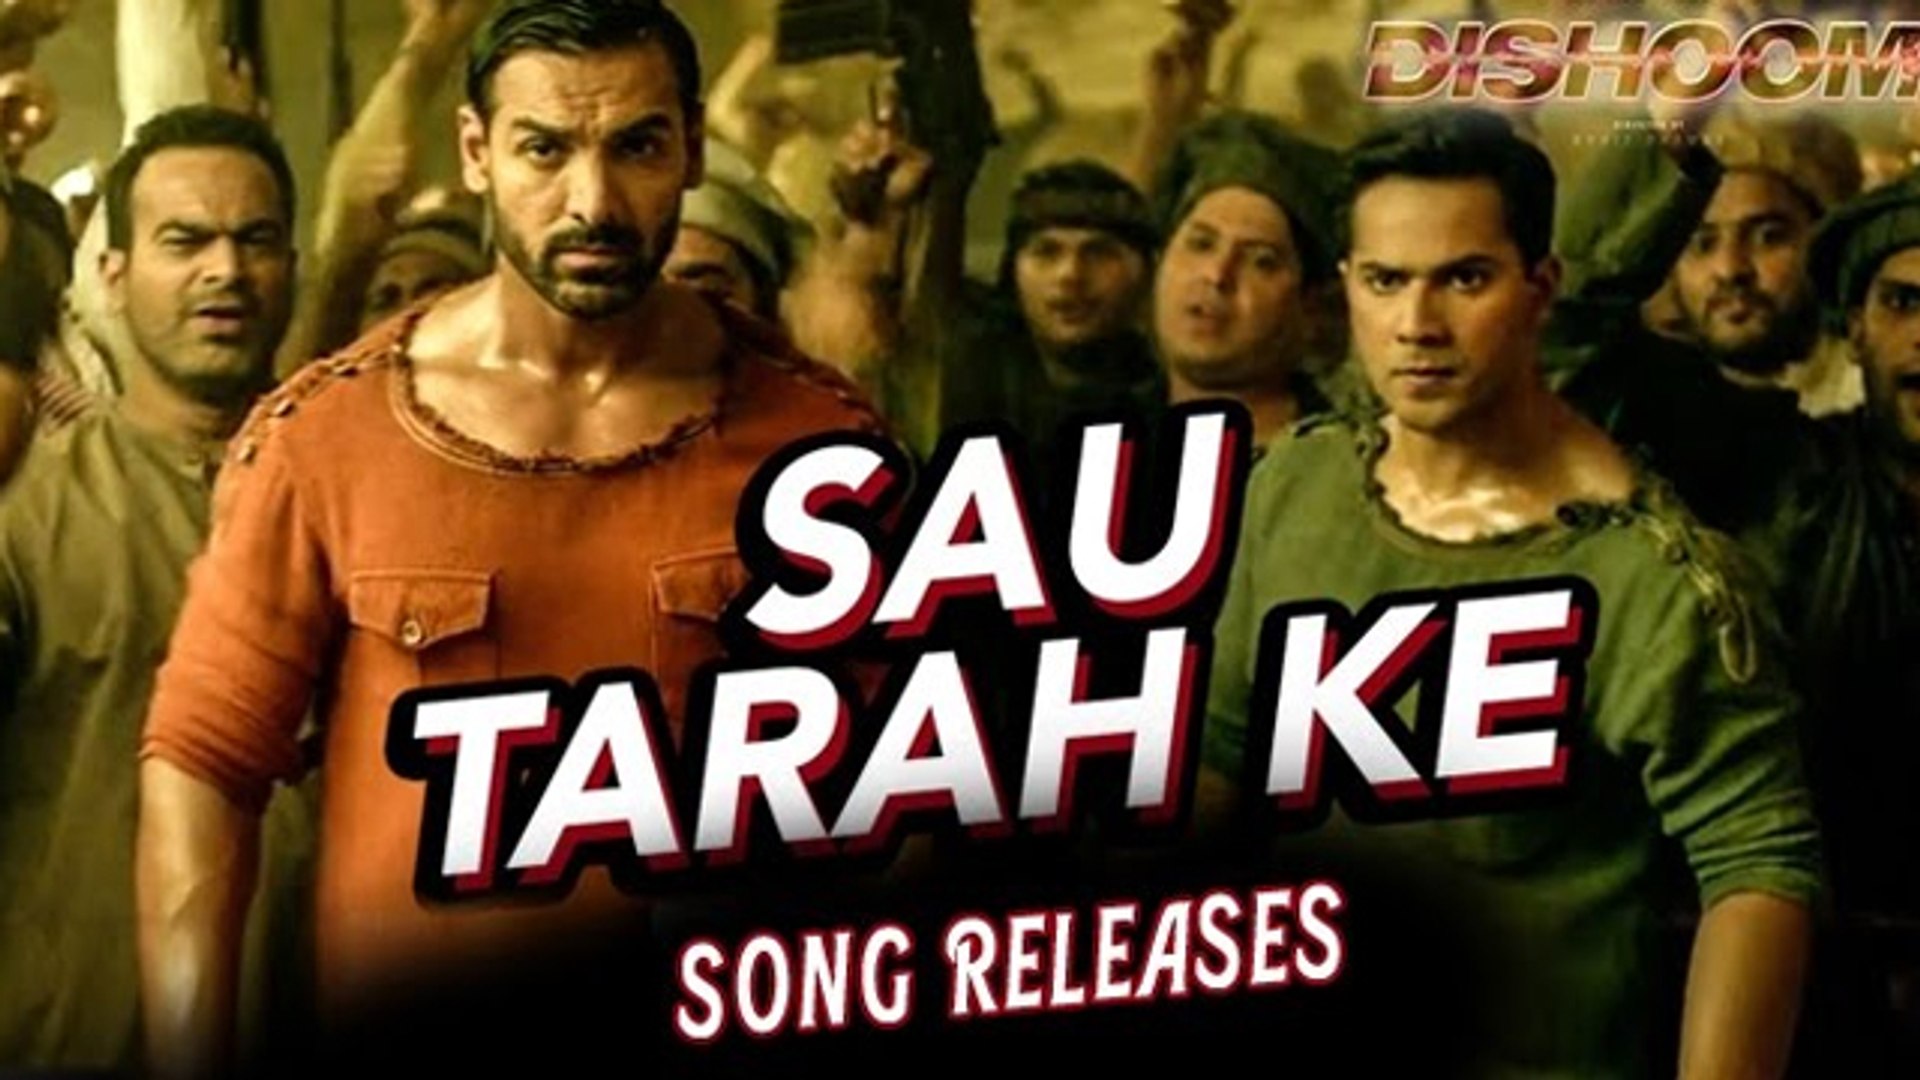 Sau Tarah Ke Official Song | Dishoom | John Abraham, Varun Dhawan,  Jacqueline Fernandez | Out Now - video Dailymotion